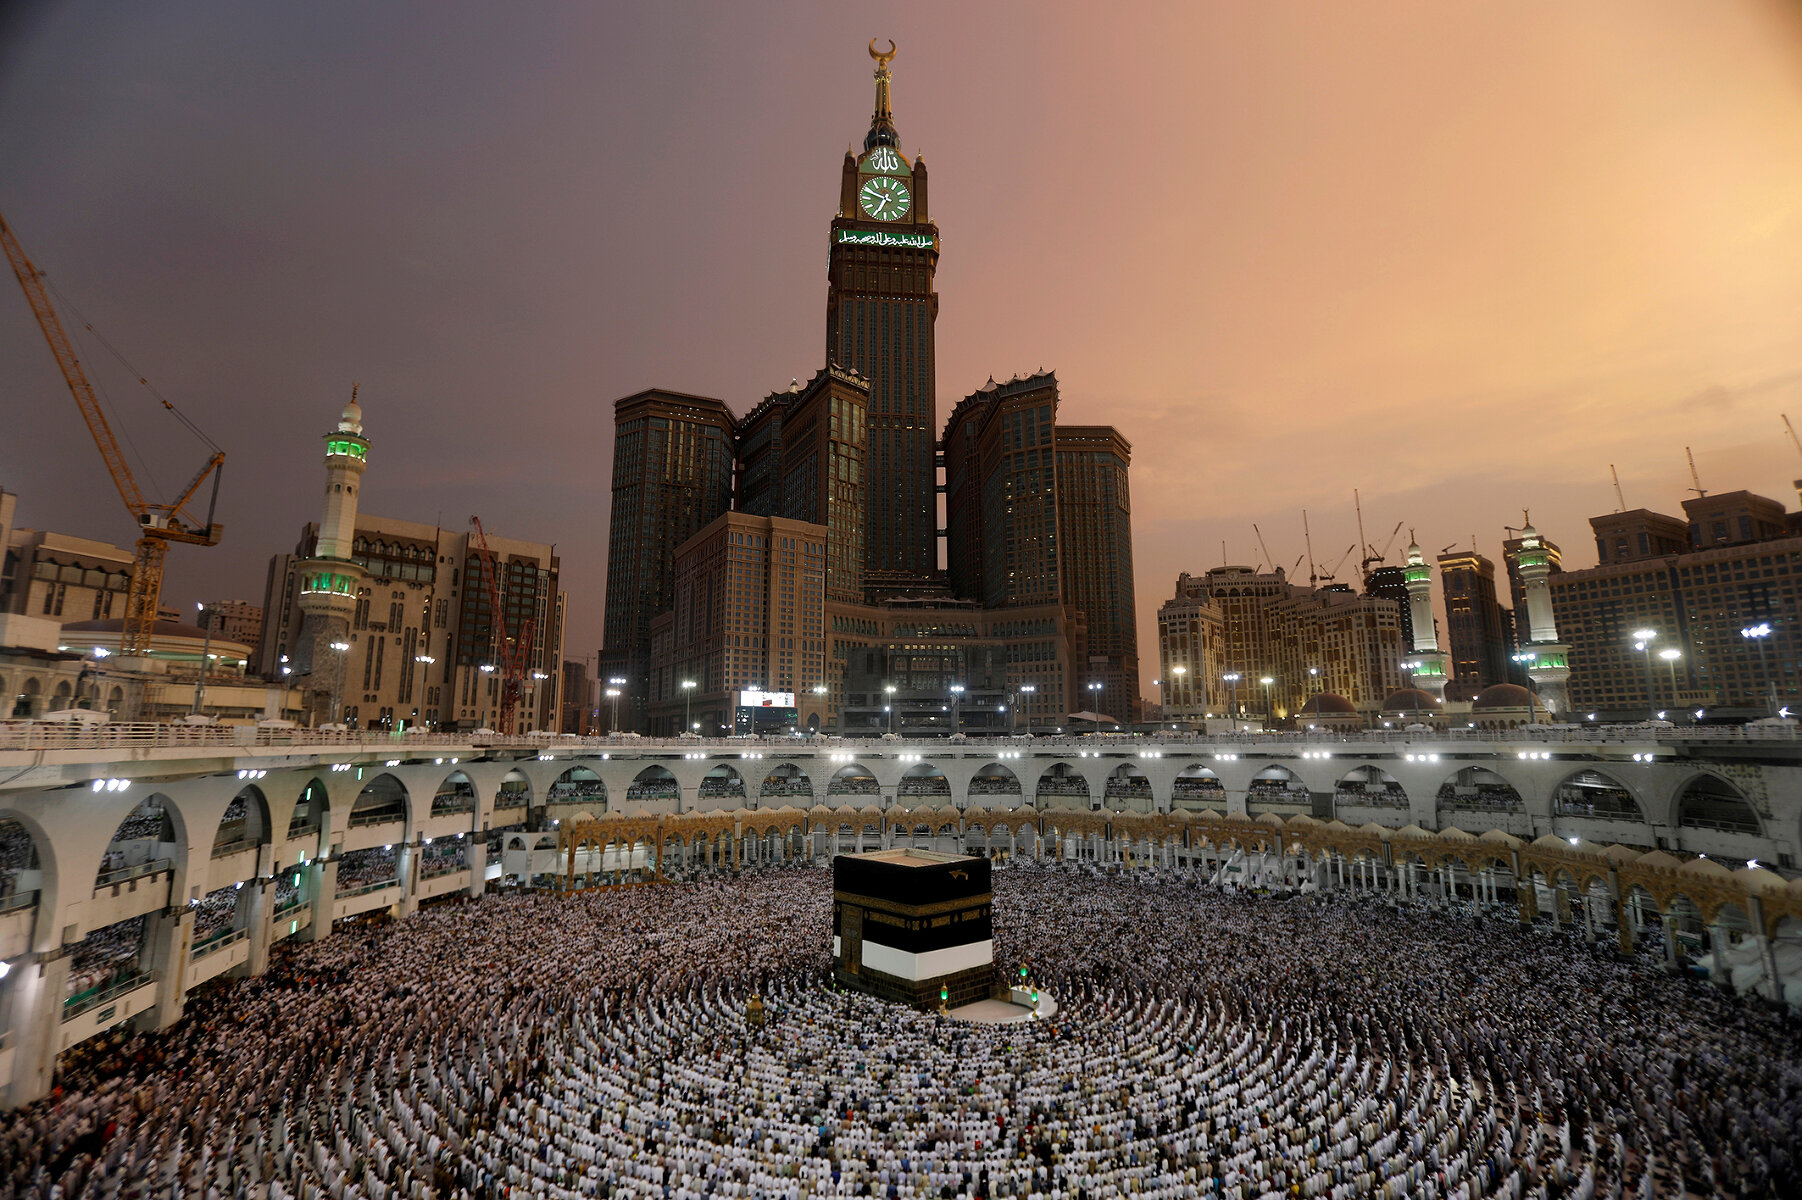 <p>Мусульмане молятся в мечети аль-Харам накануне ежегодного паломничества в Мекку</p>

<p> </p>